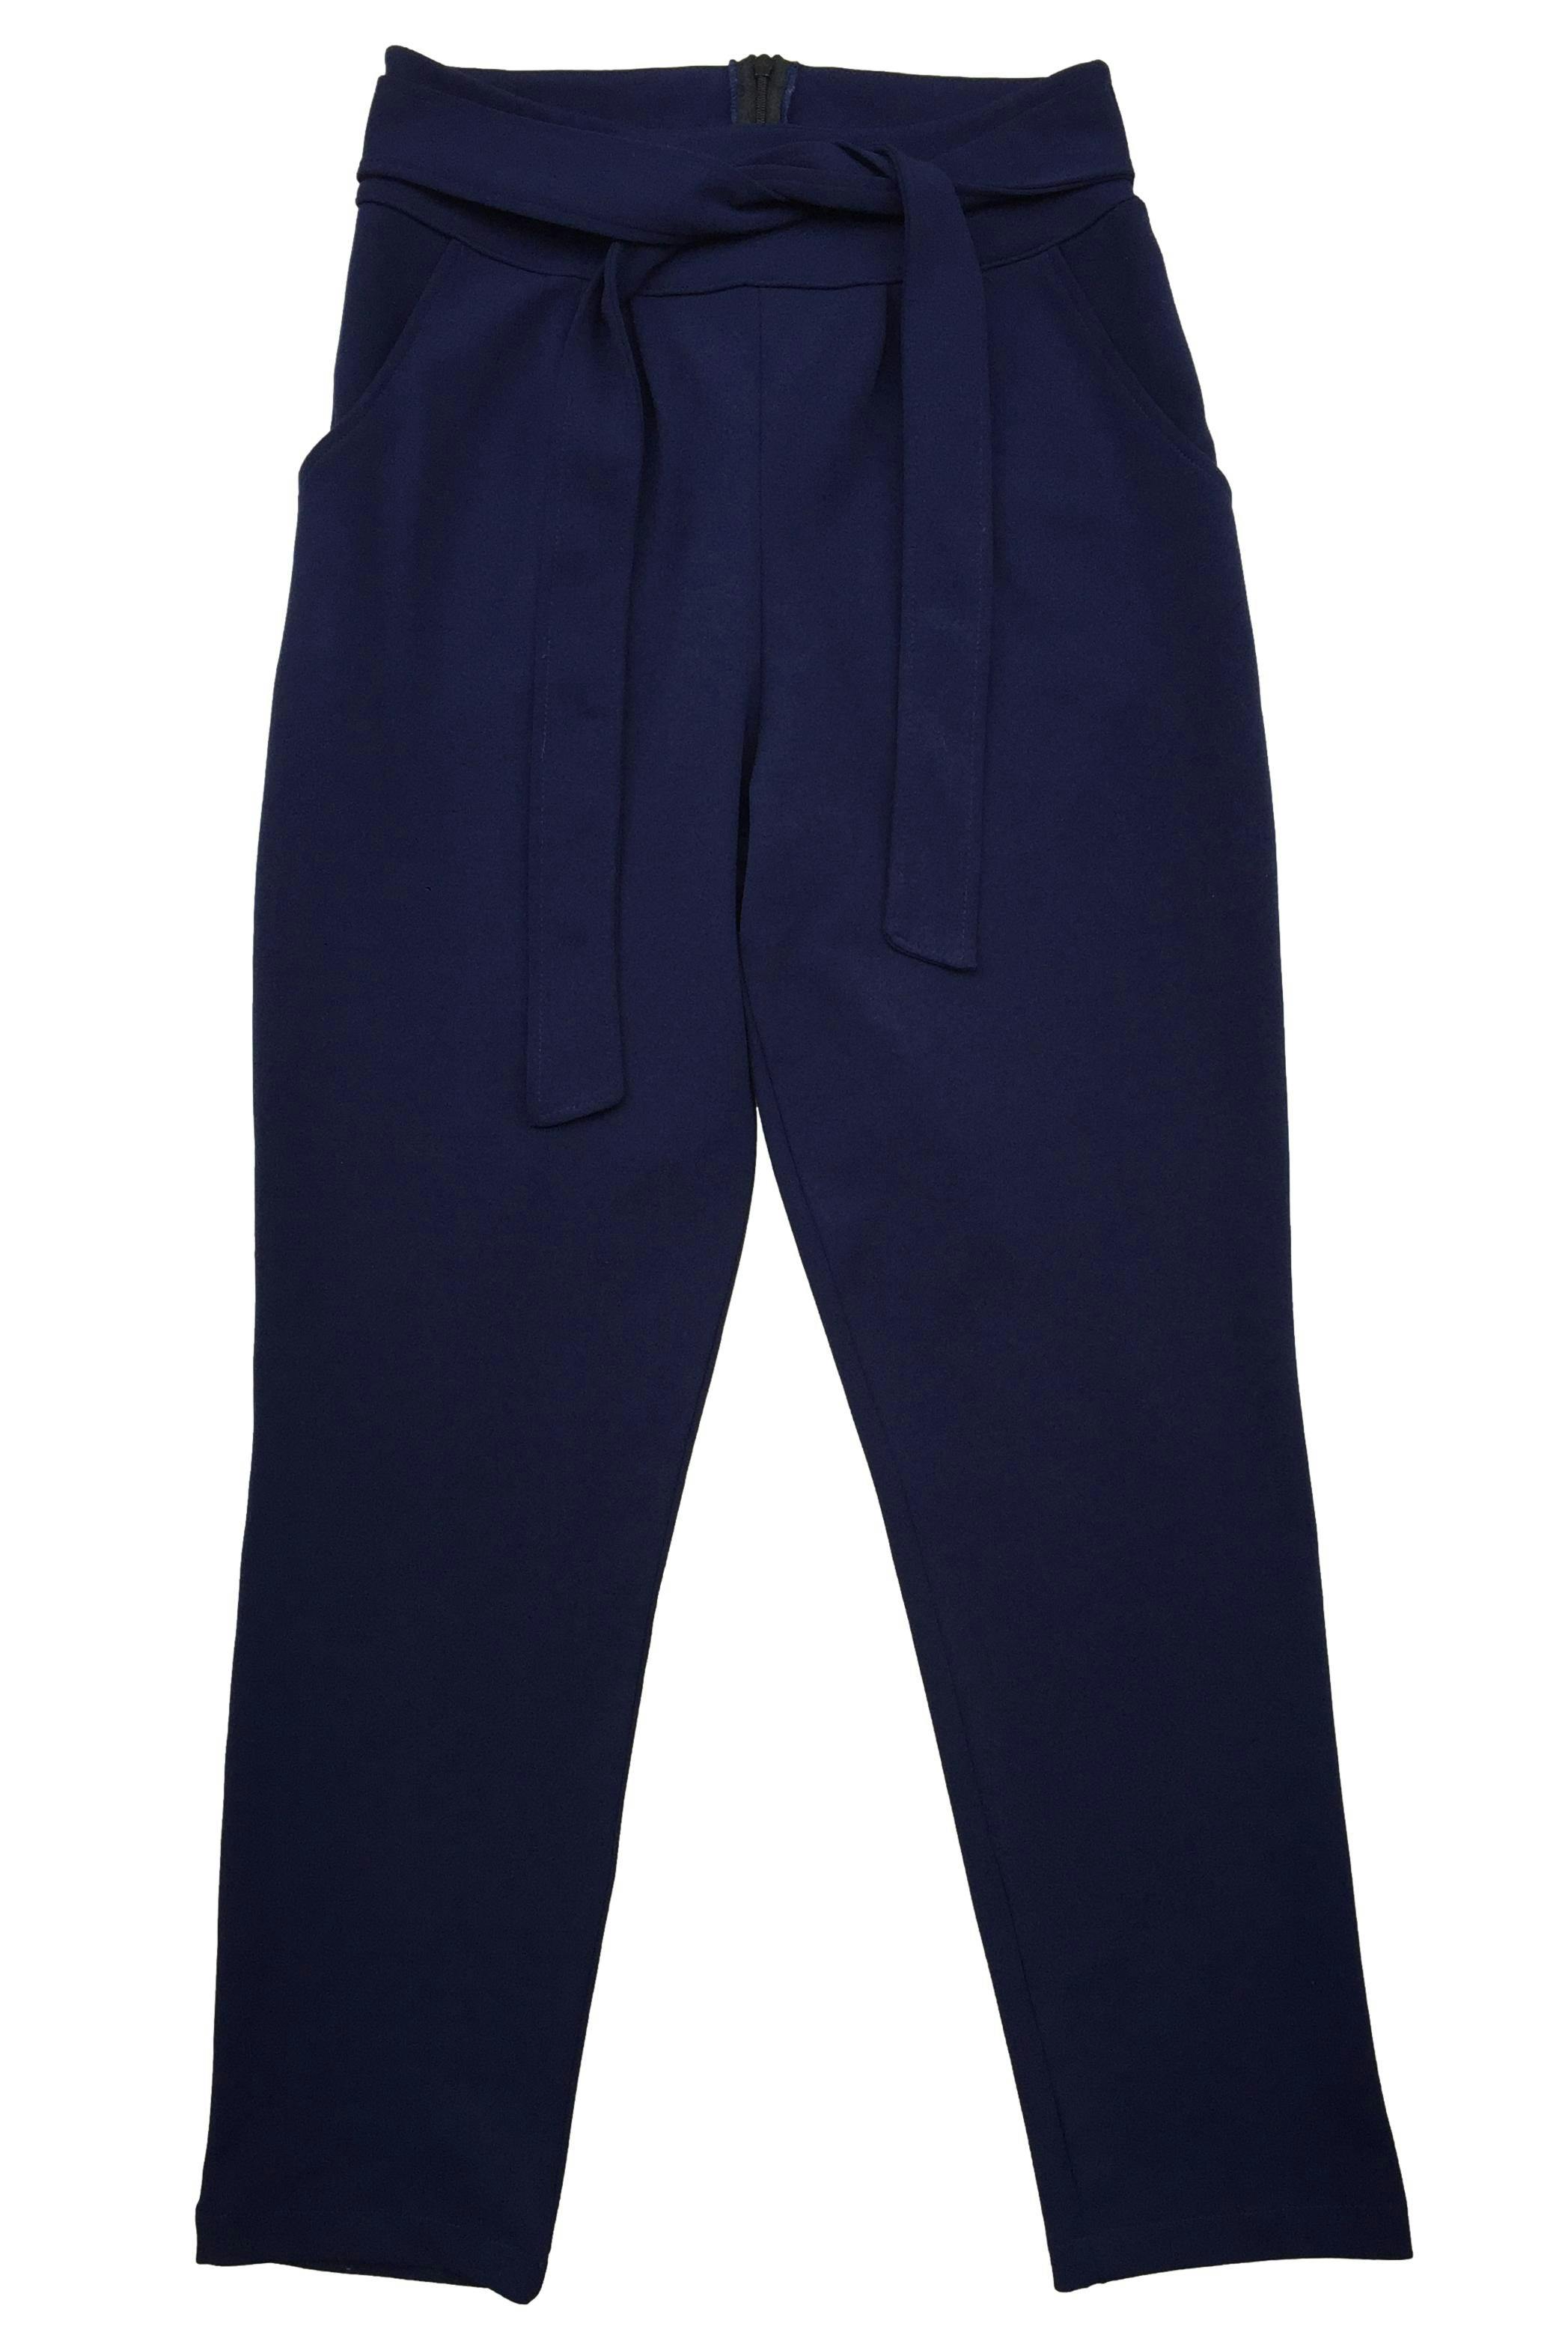 pantalon - Pantalón azul One love 100% algodón con cintos para amarrar, bolsillos y cierre posterior. Cintura 68 cm, Tiro 32 cm, Largo 97 cm.  - Talla S  - One love